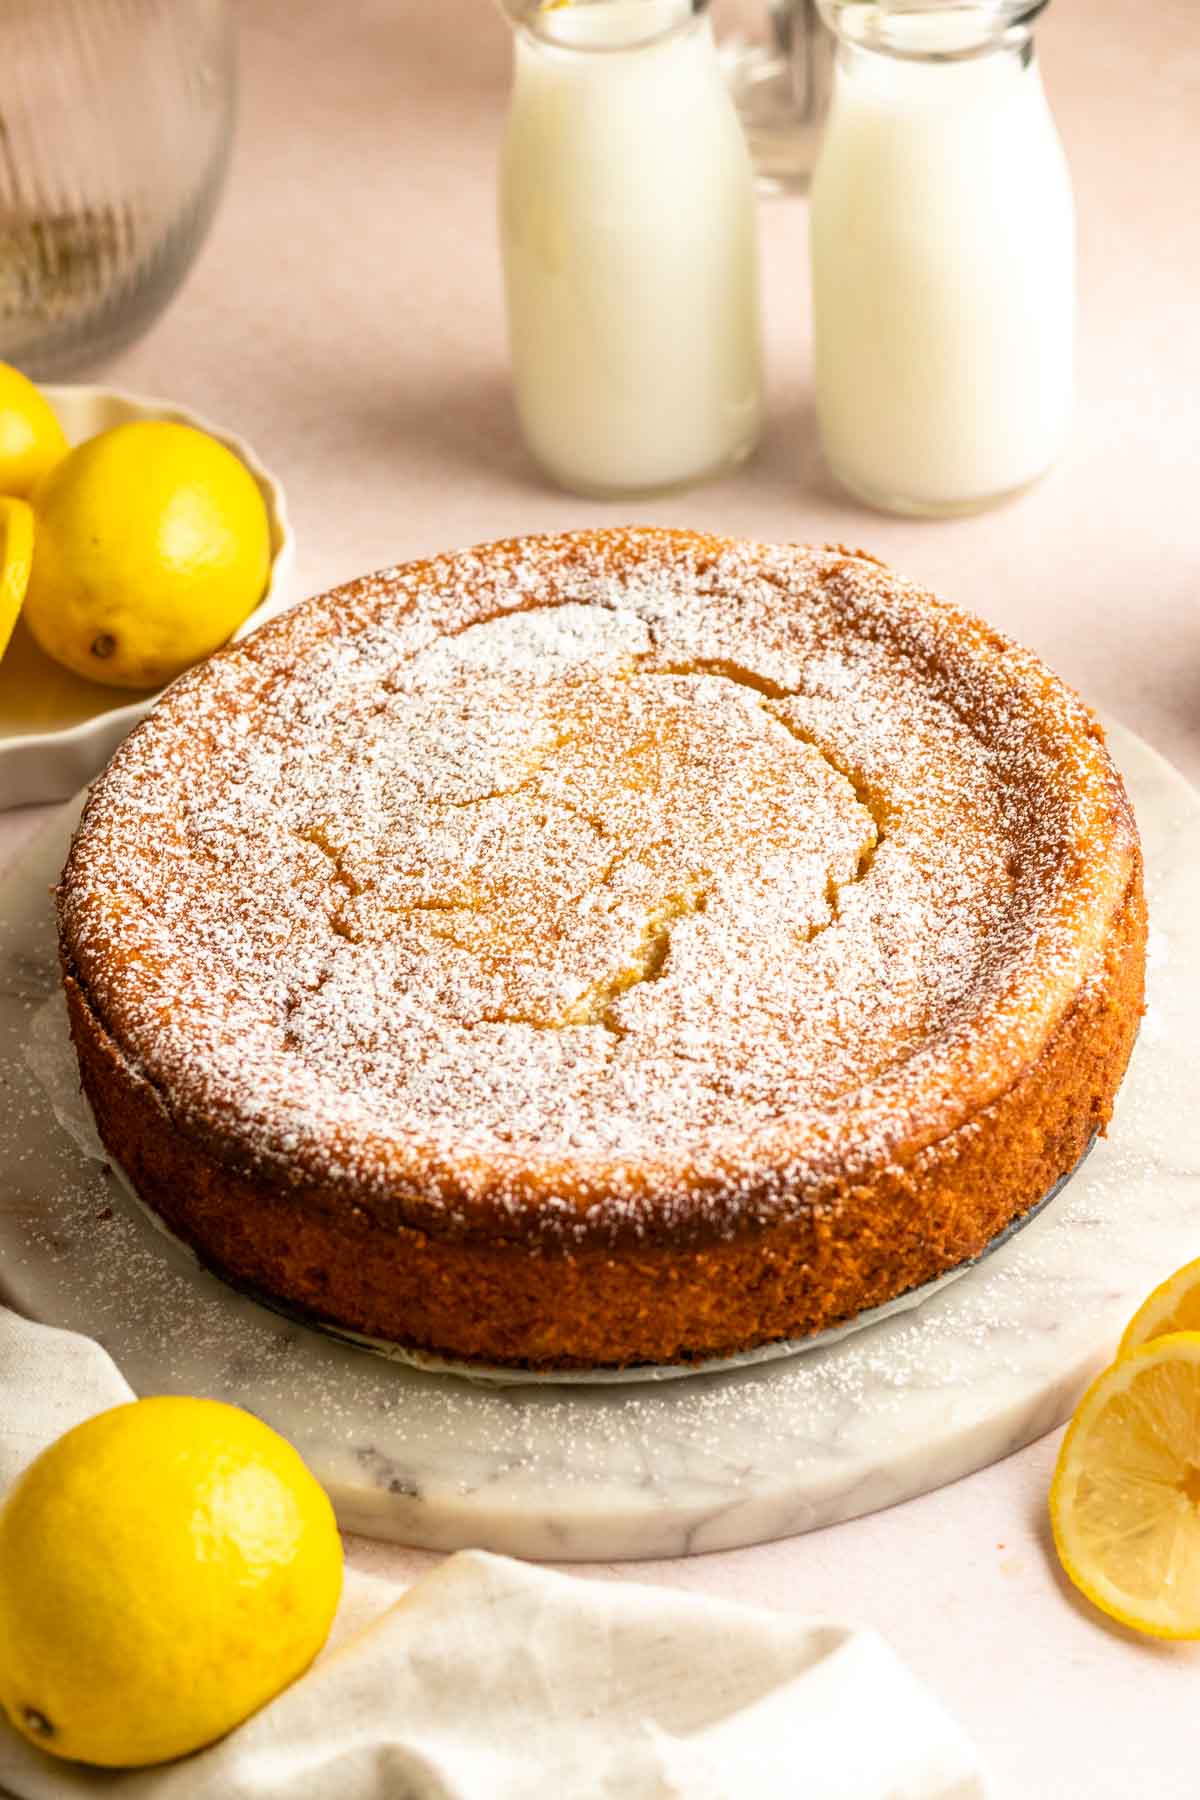 Lemon ricotta cake with powdered sugar on top.